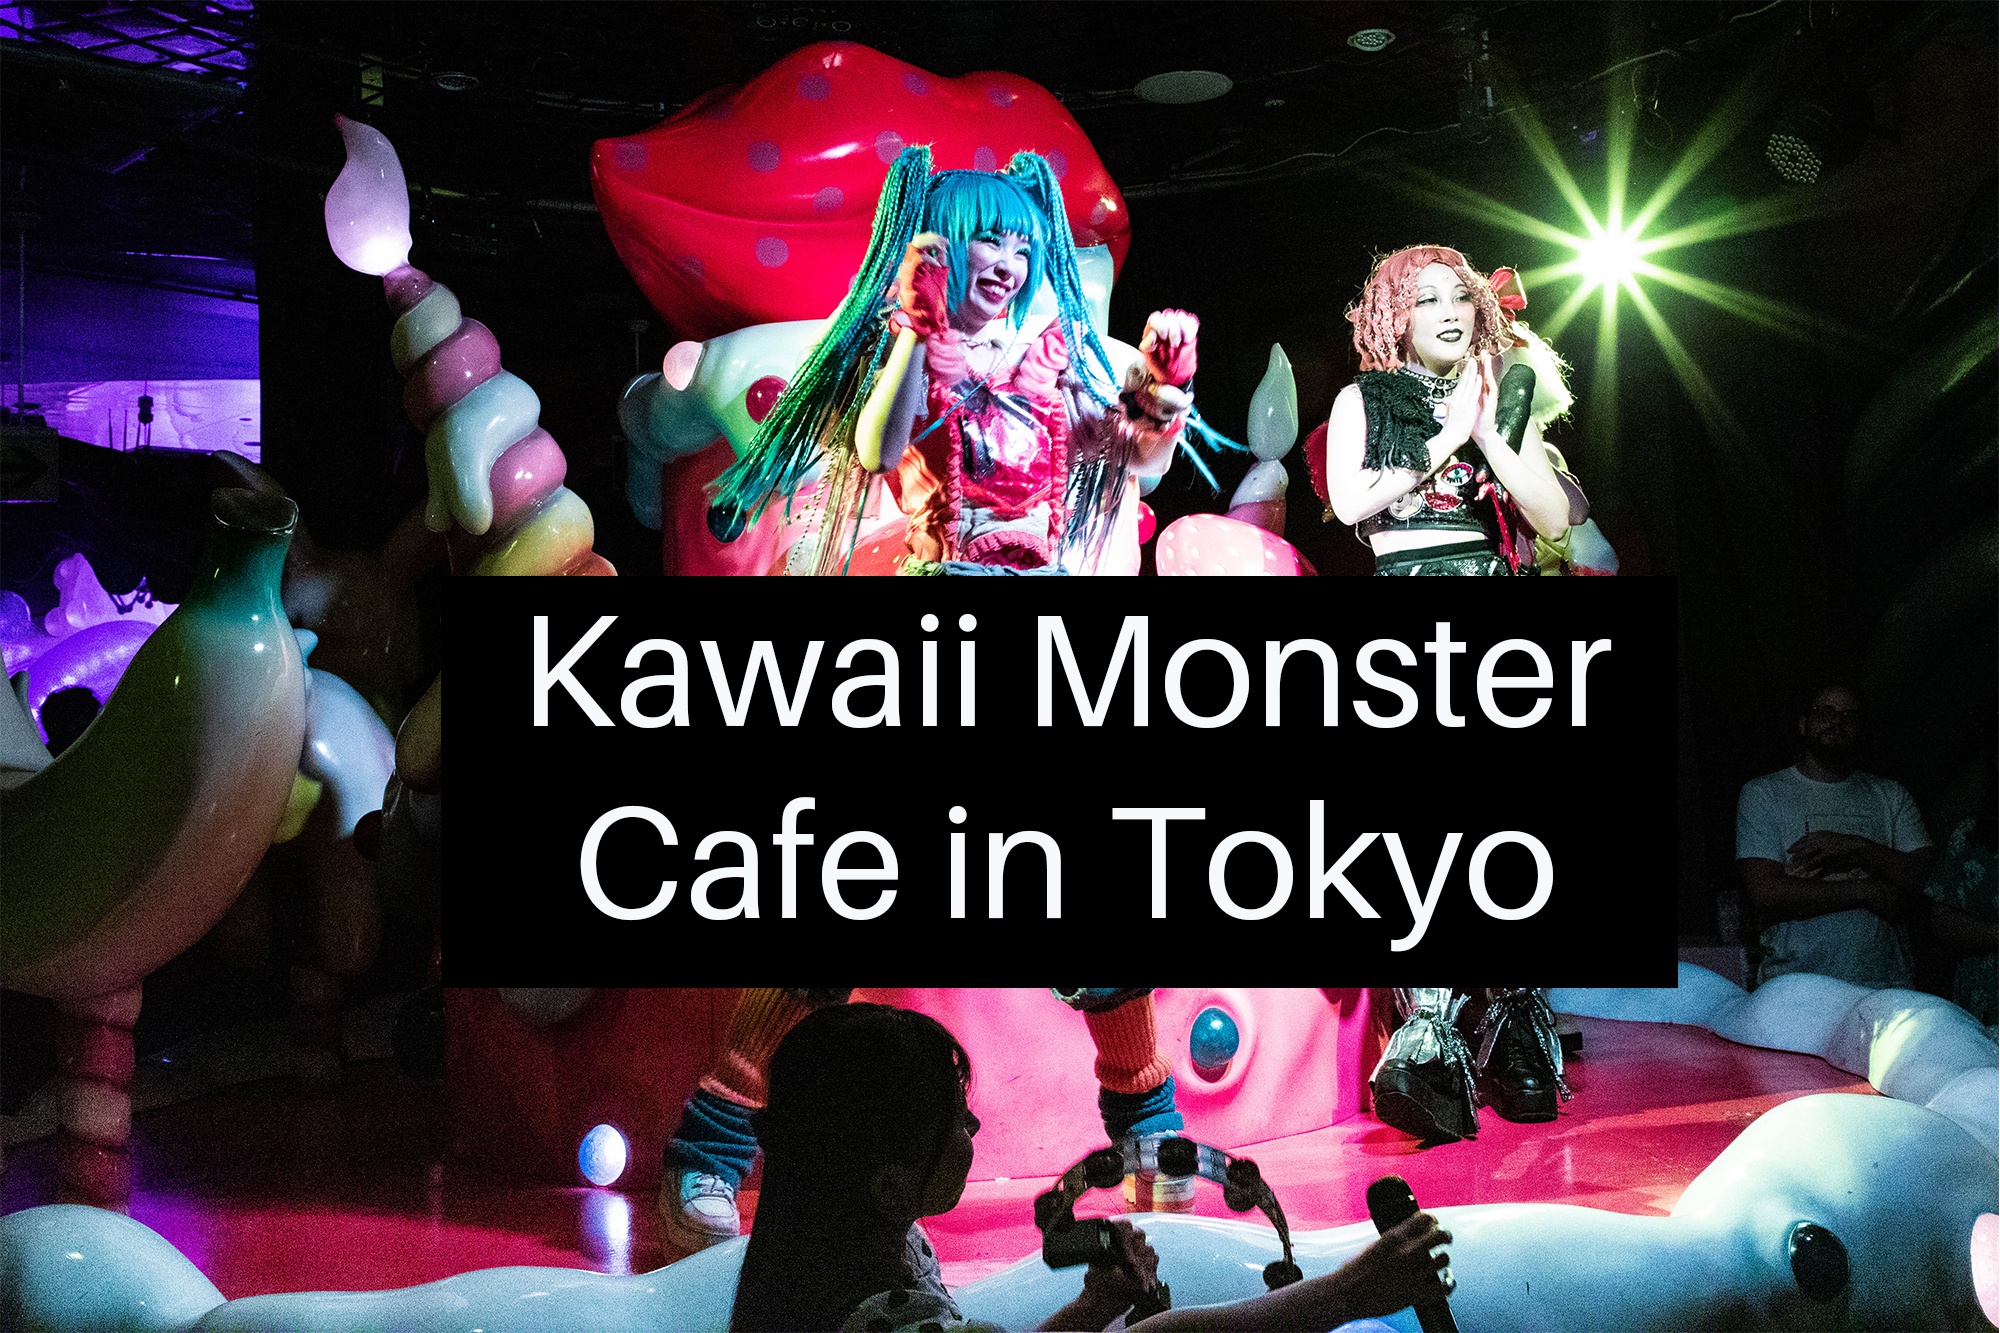 Kawaii Monster Cafe Tokyo.